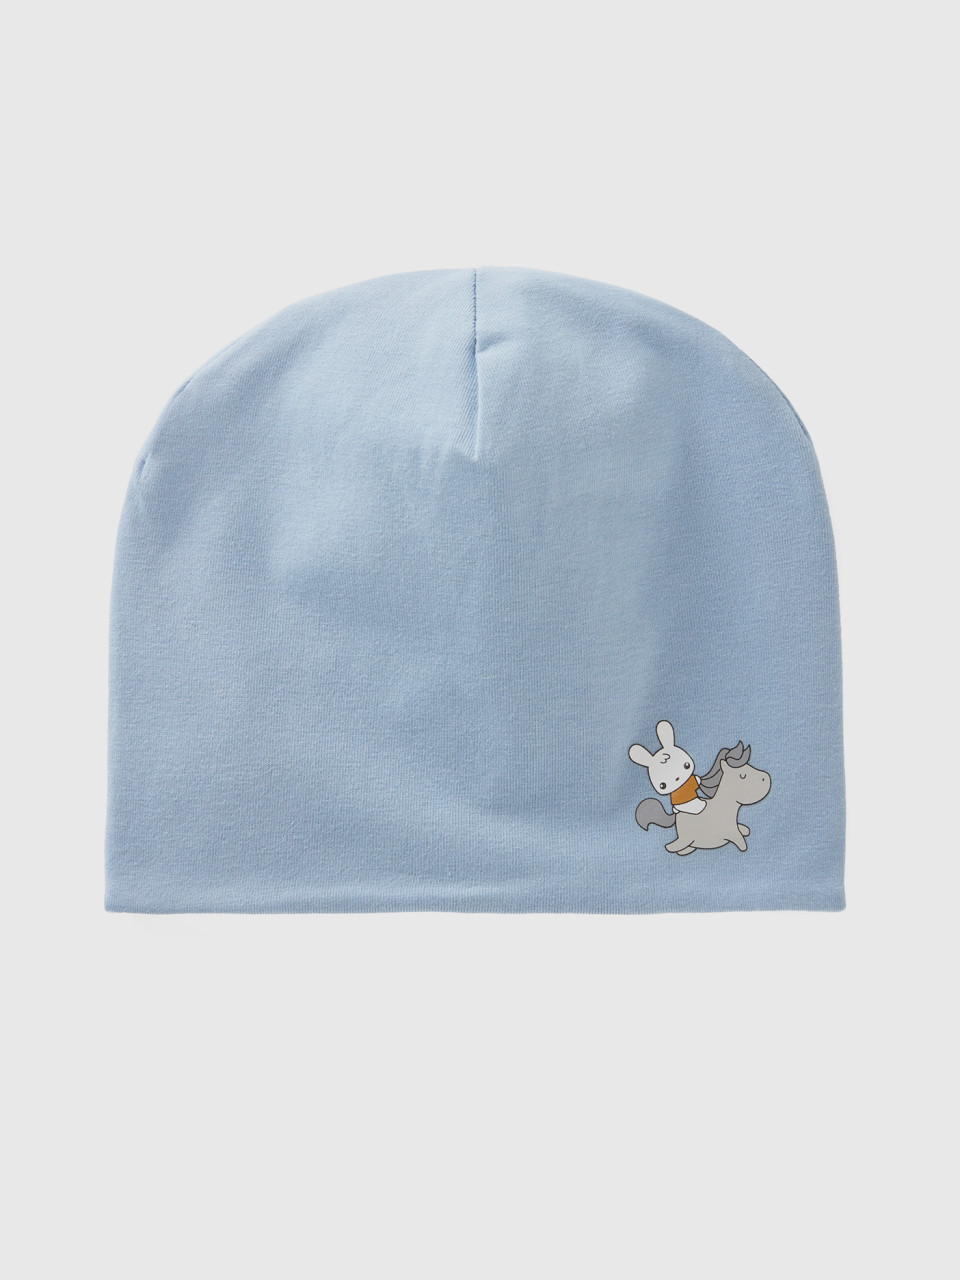 Benetton, Cotton Hat With Print, Sky Blue, Kids